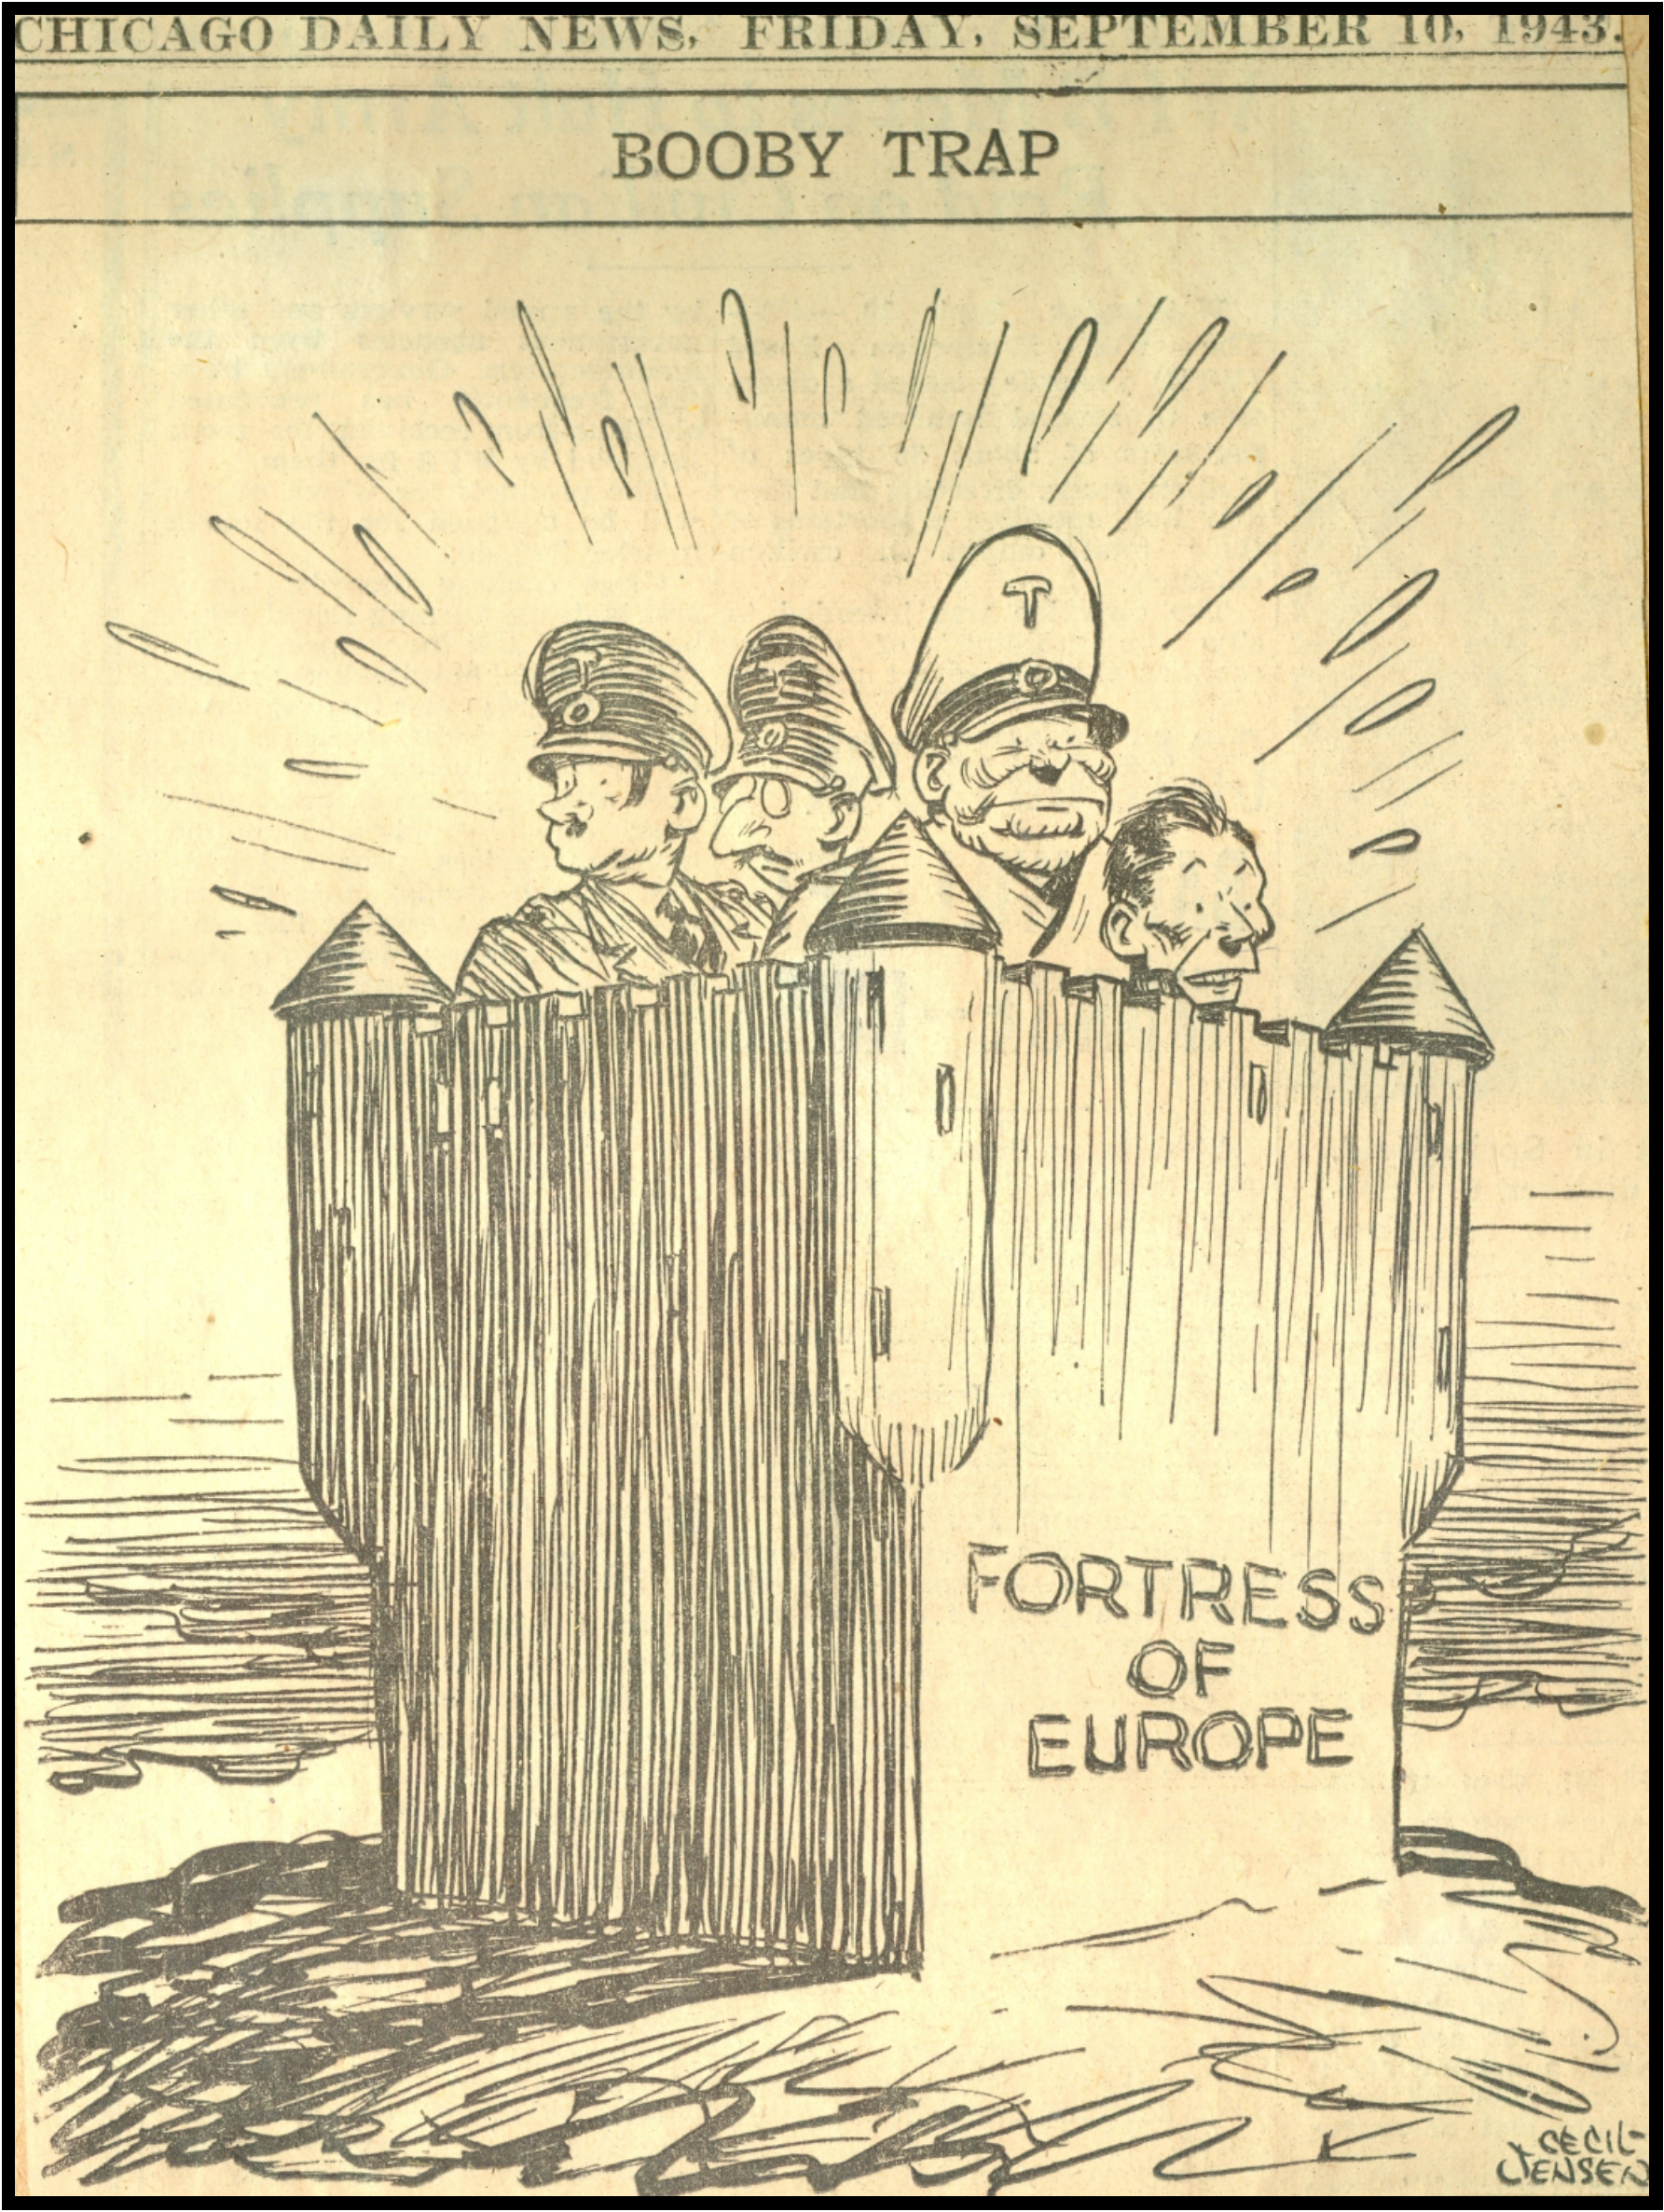 War Cartoon, "Booby Trap", Chicago Tribune, September 10, 1943